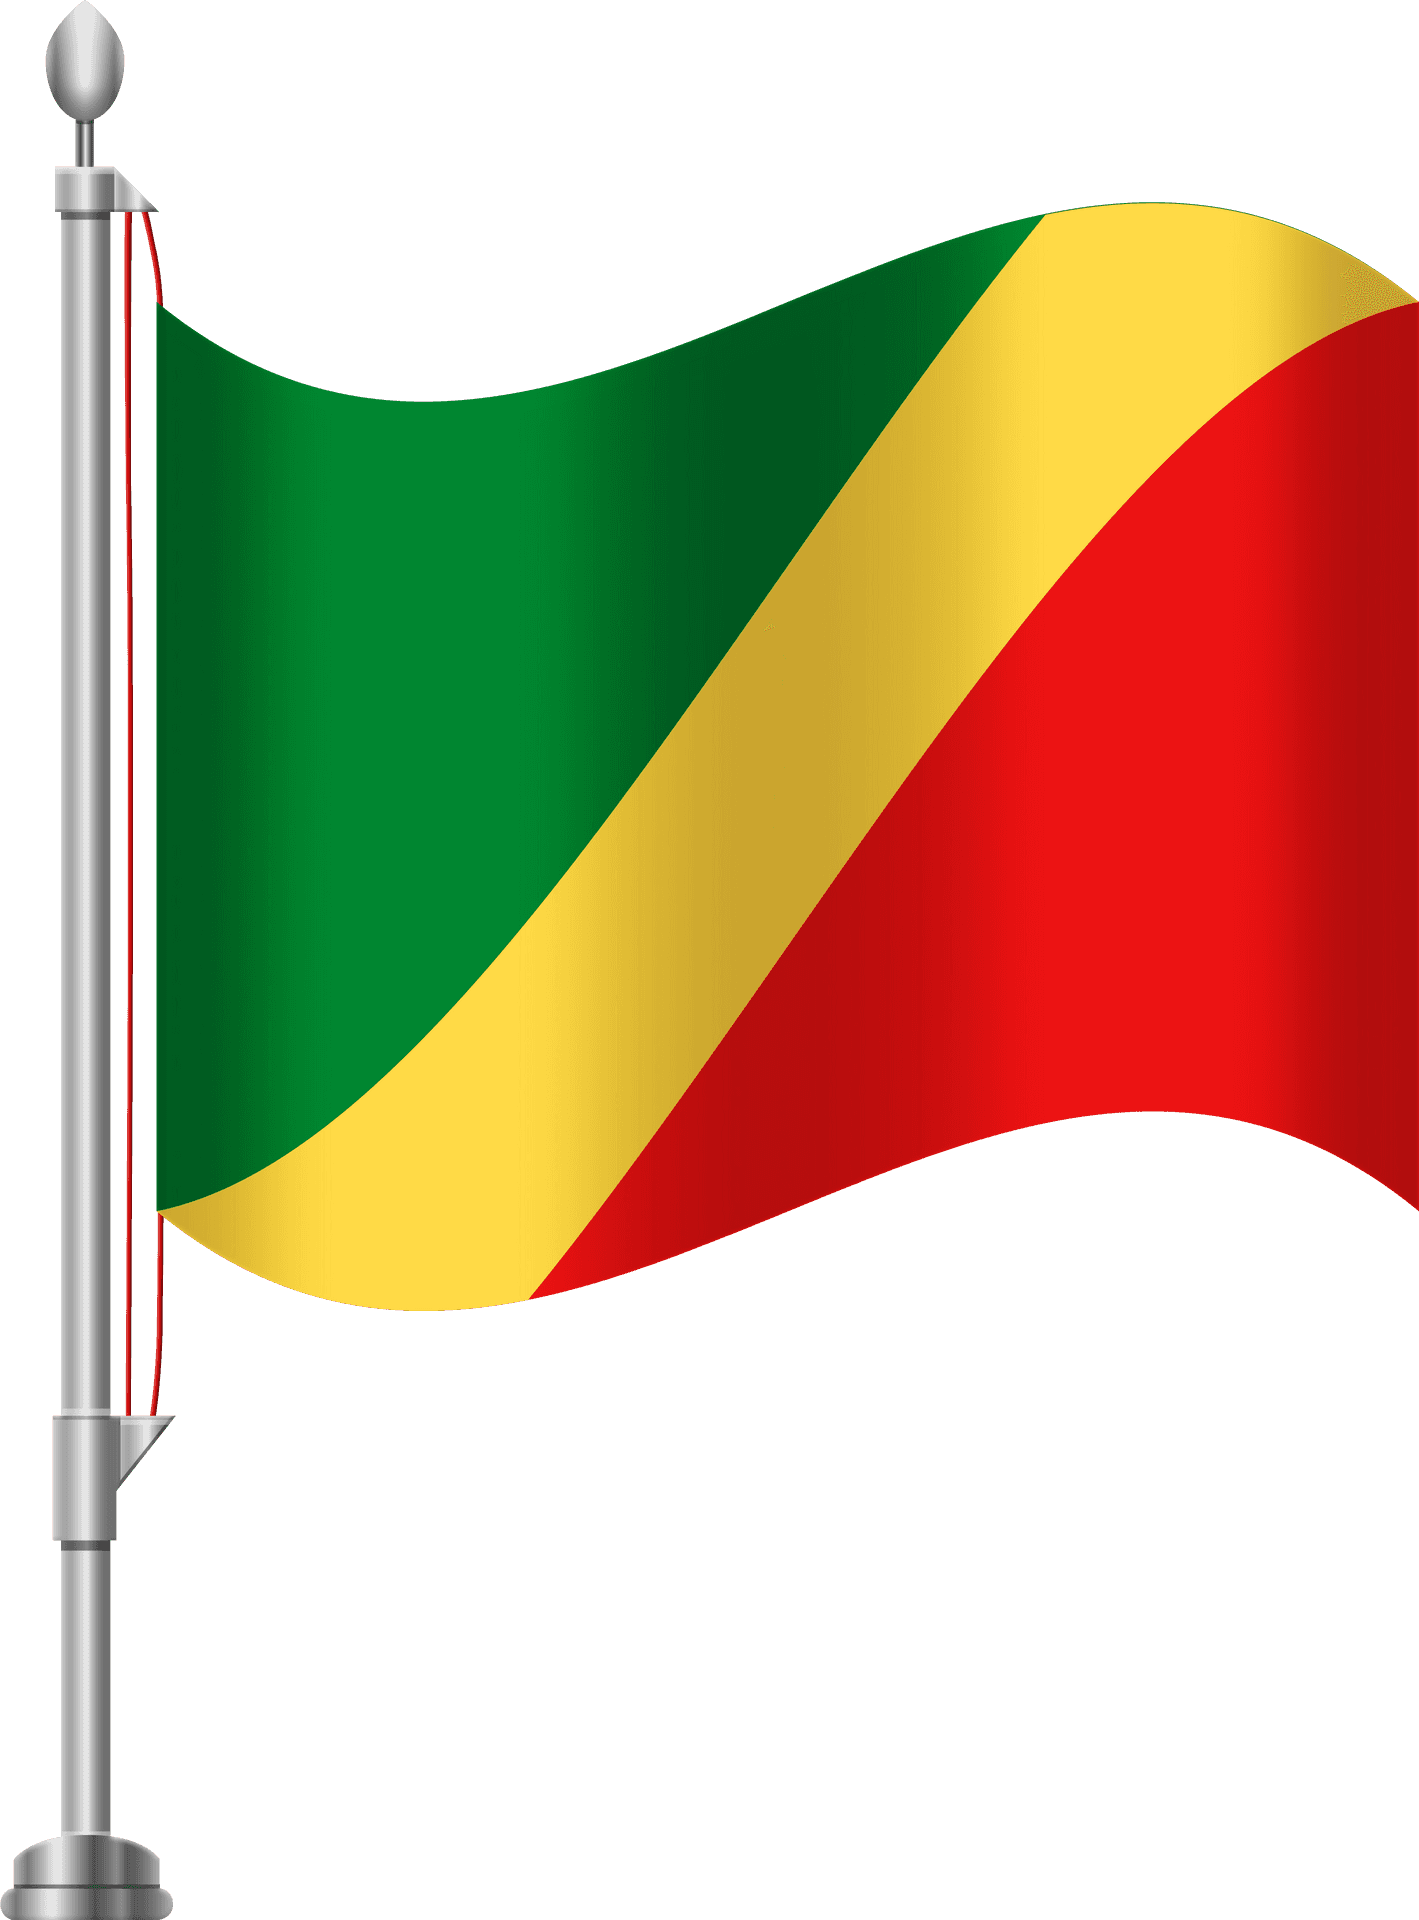 Congo Republic Flagon Pole PNG image